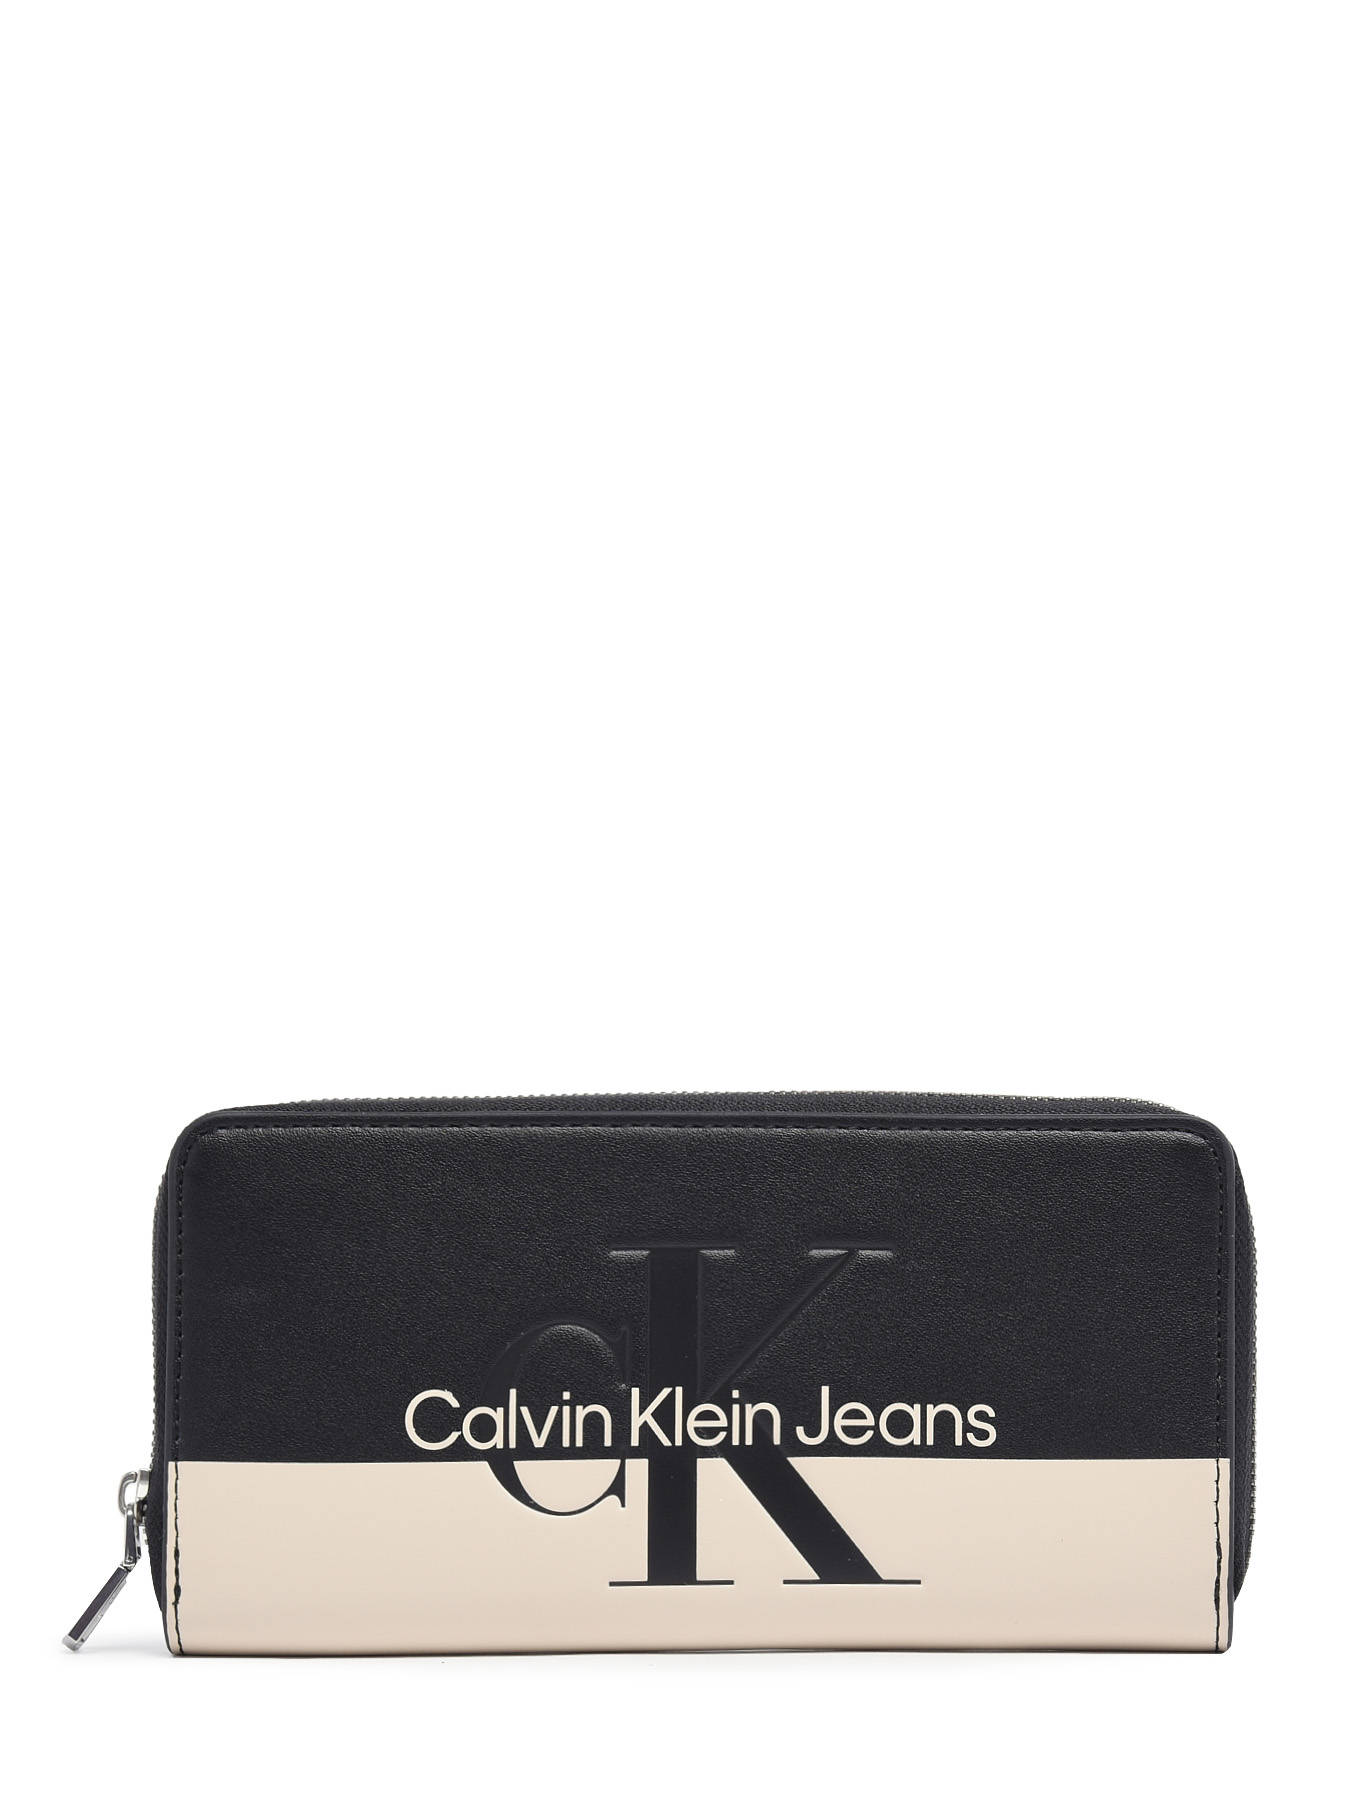 Weinig Umeki vervorming Portefeuilles Calvin Klein Jeans Sculpted K60K609817 op edisac.be